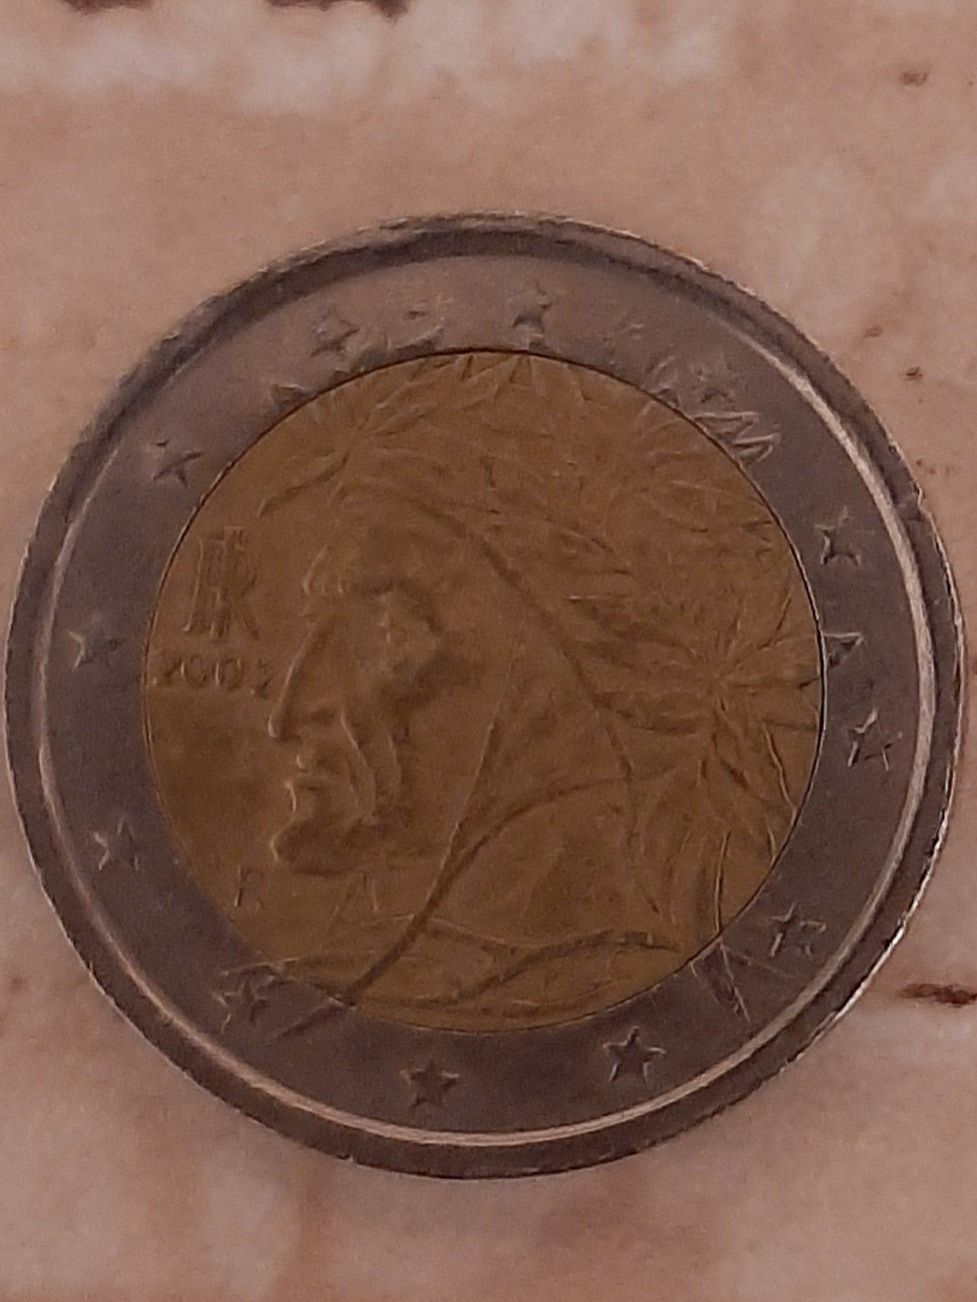 Monede rare de 2 euro din 2001 și 2002